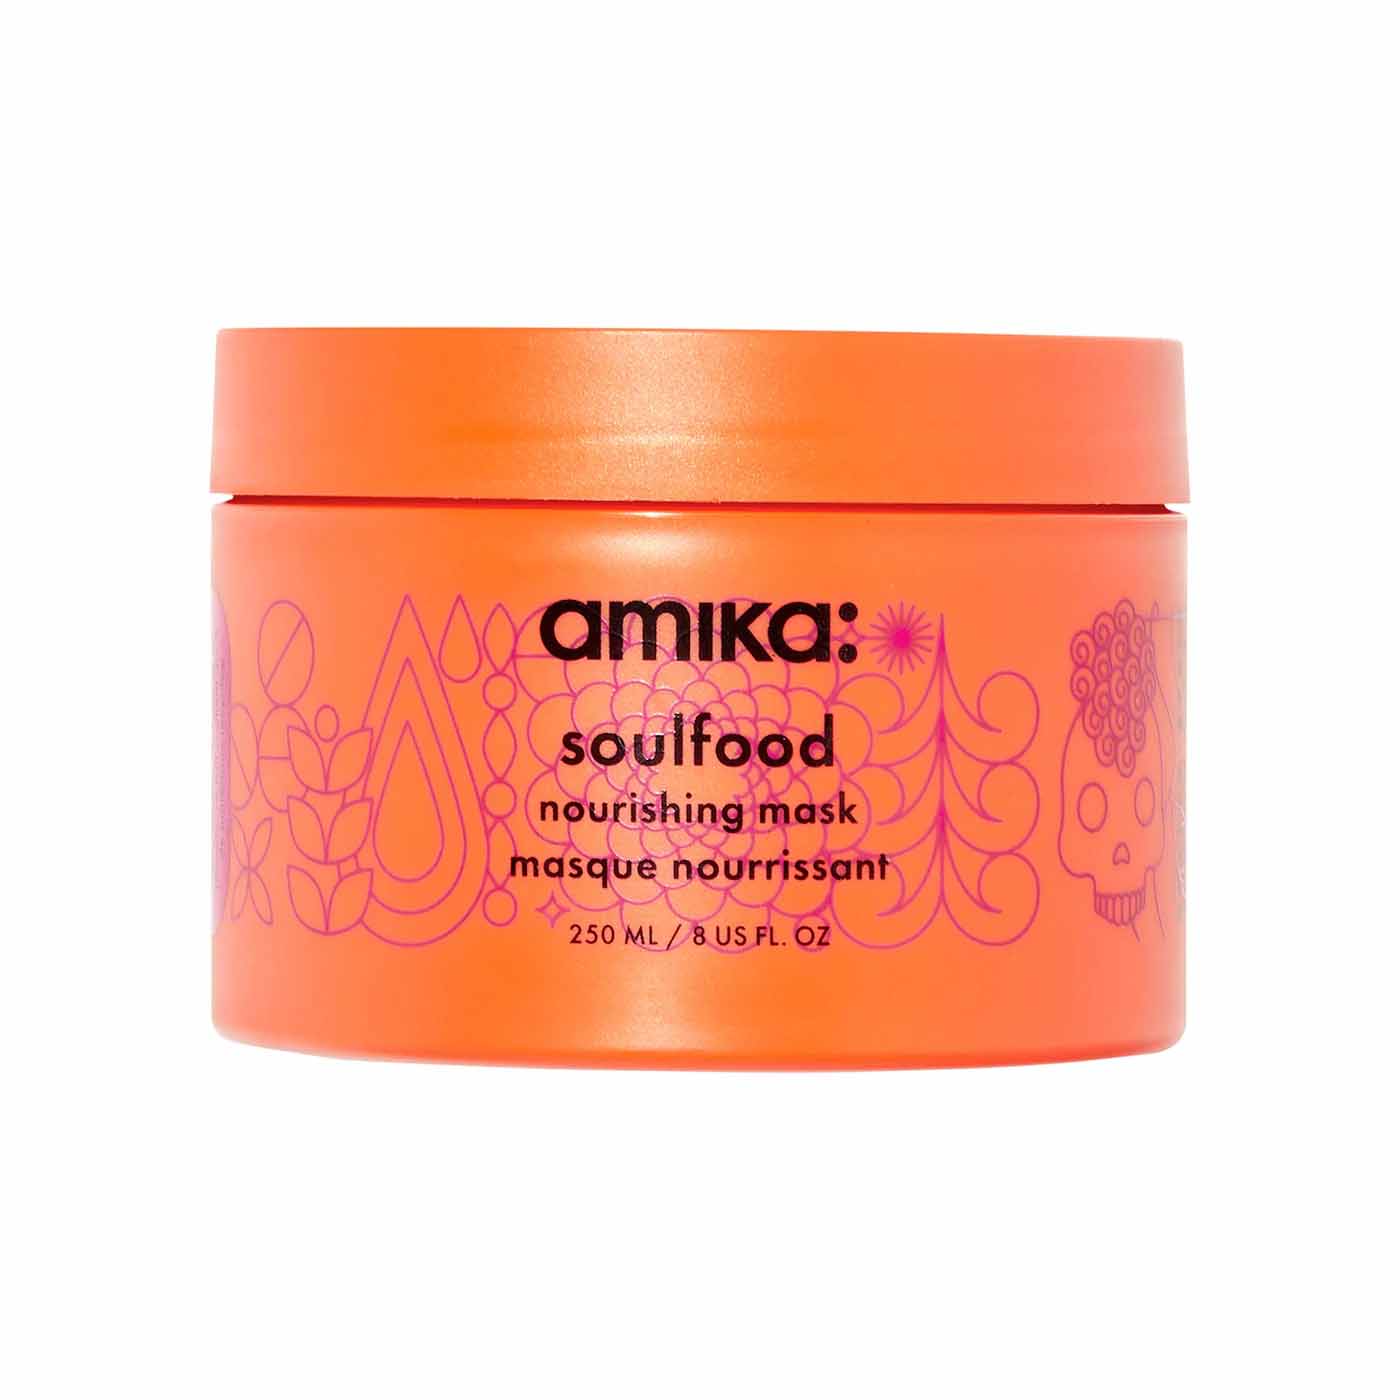 amika Soulfood Nourishing Hair Mask in orange tub